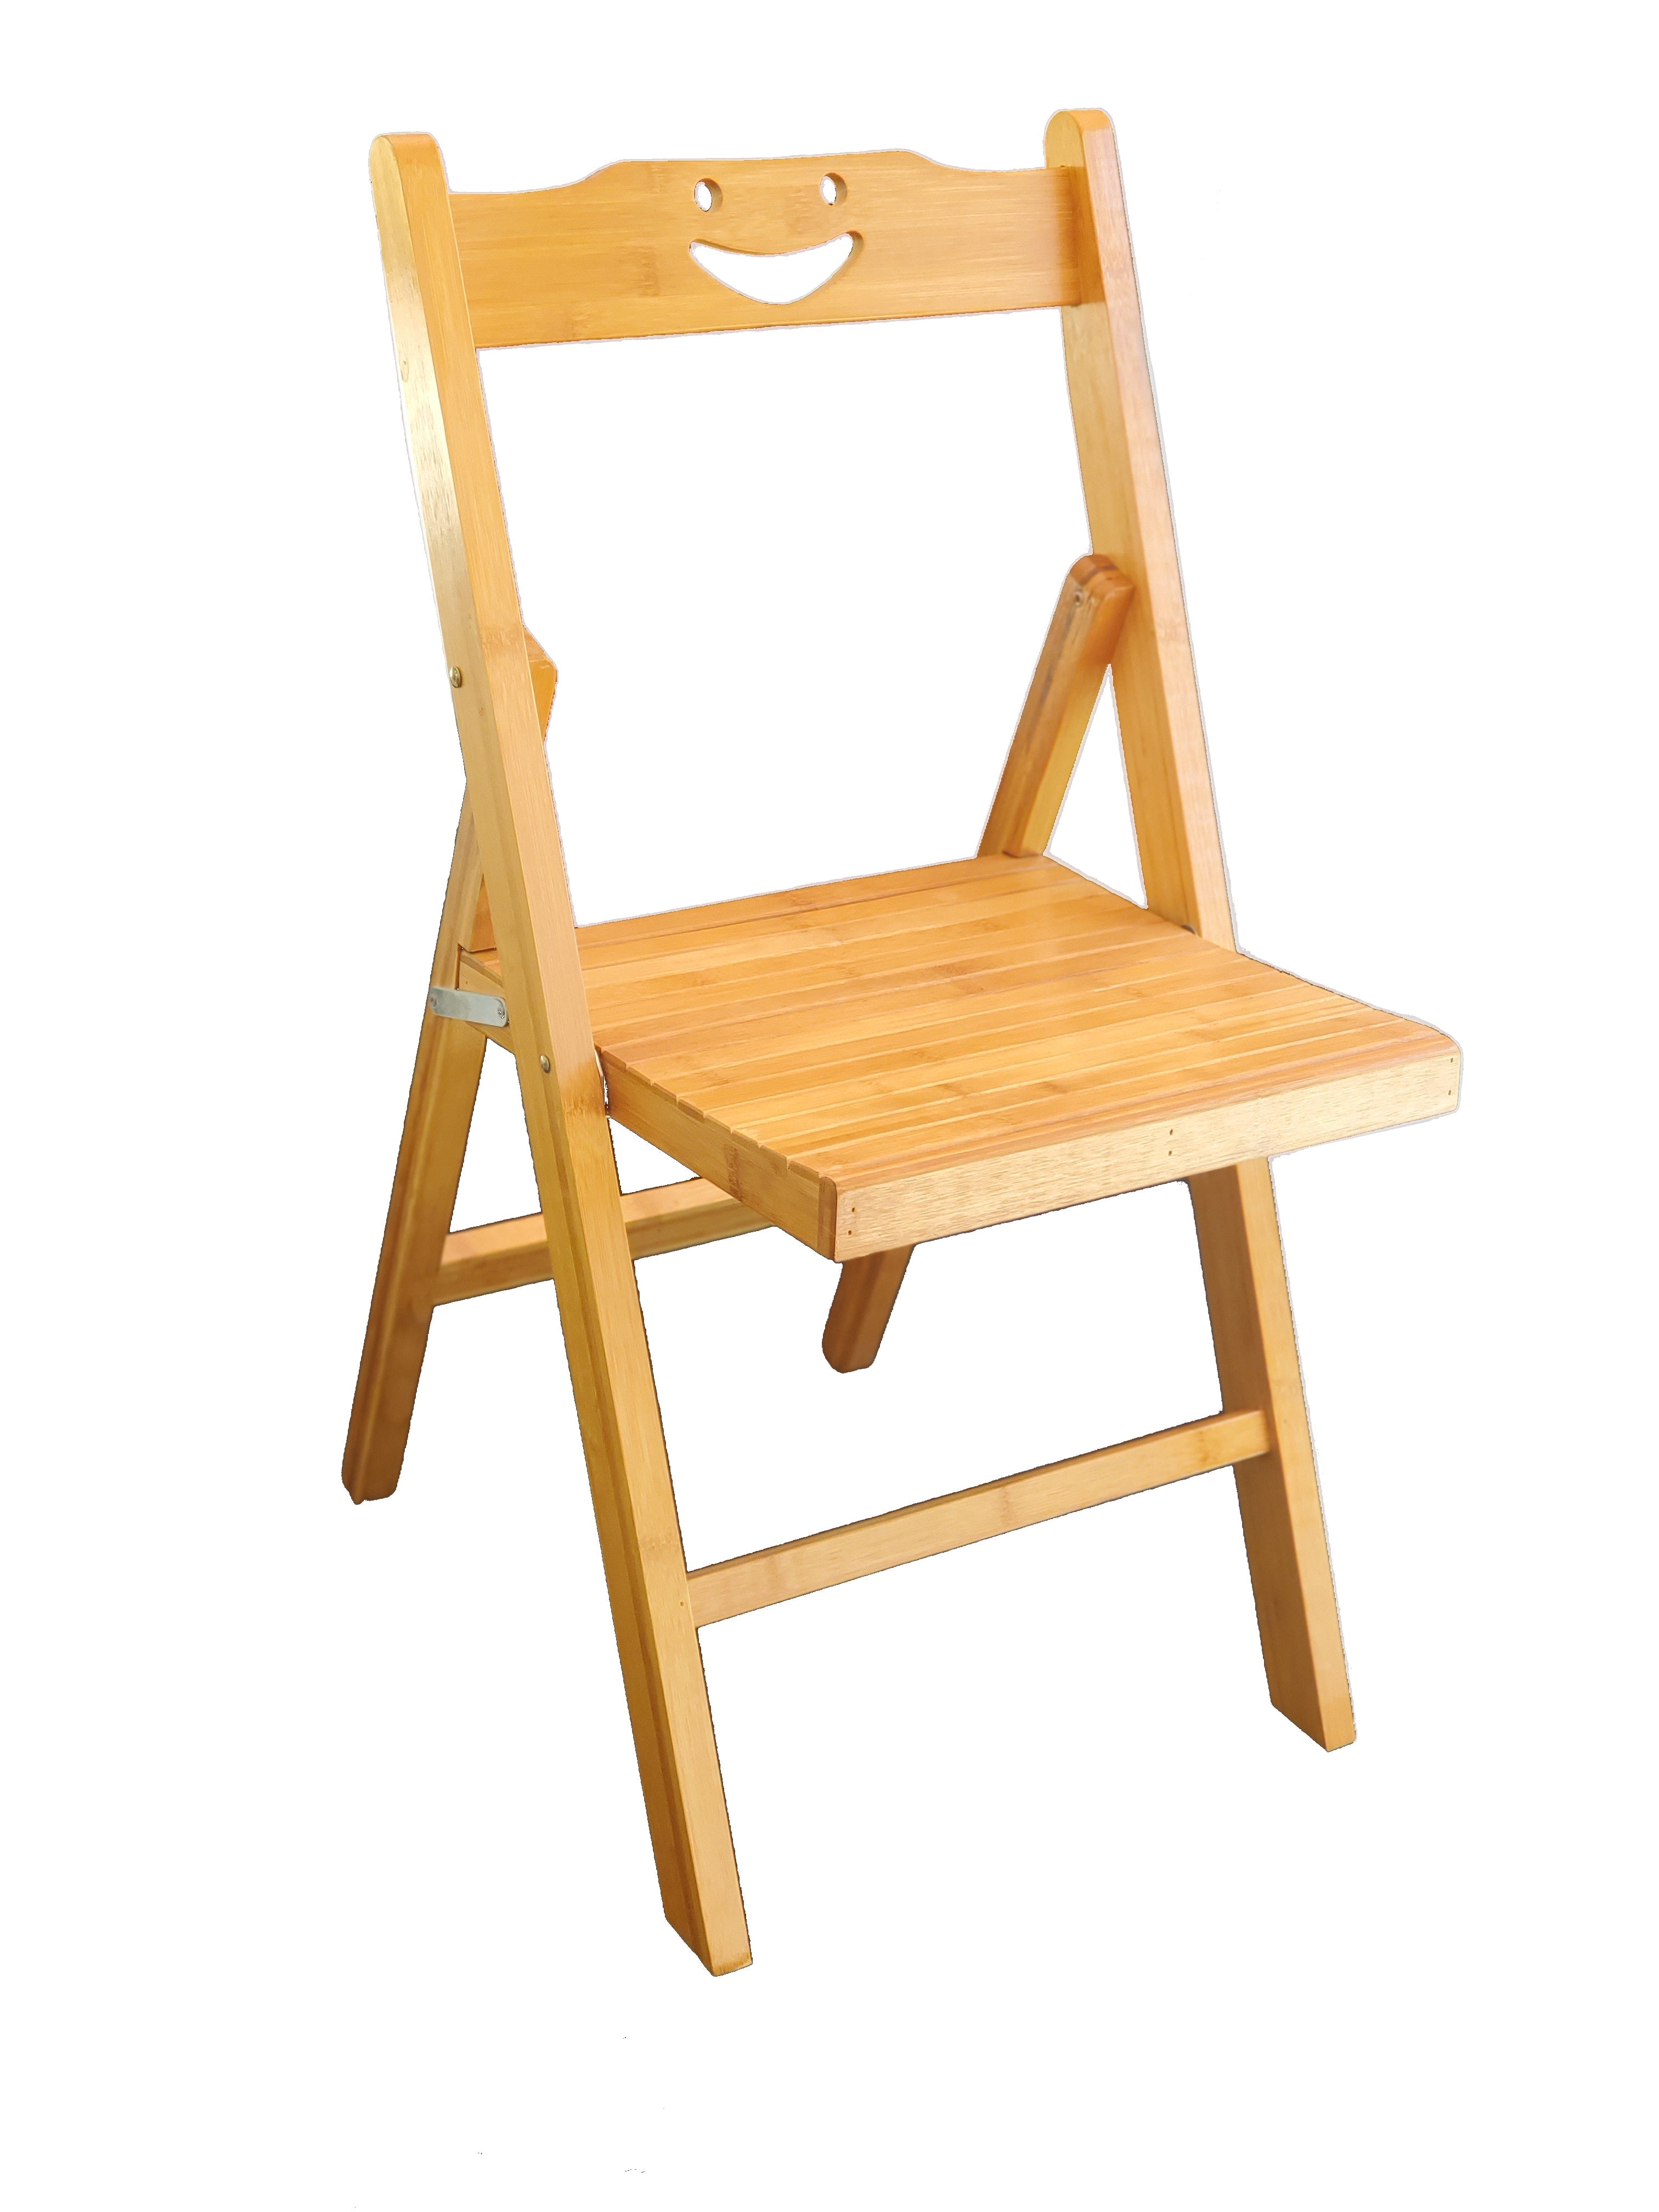 Thera360 Personal Portable Sauna - Bamboo Chair